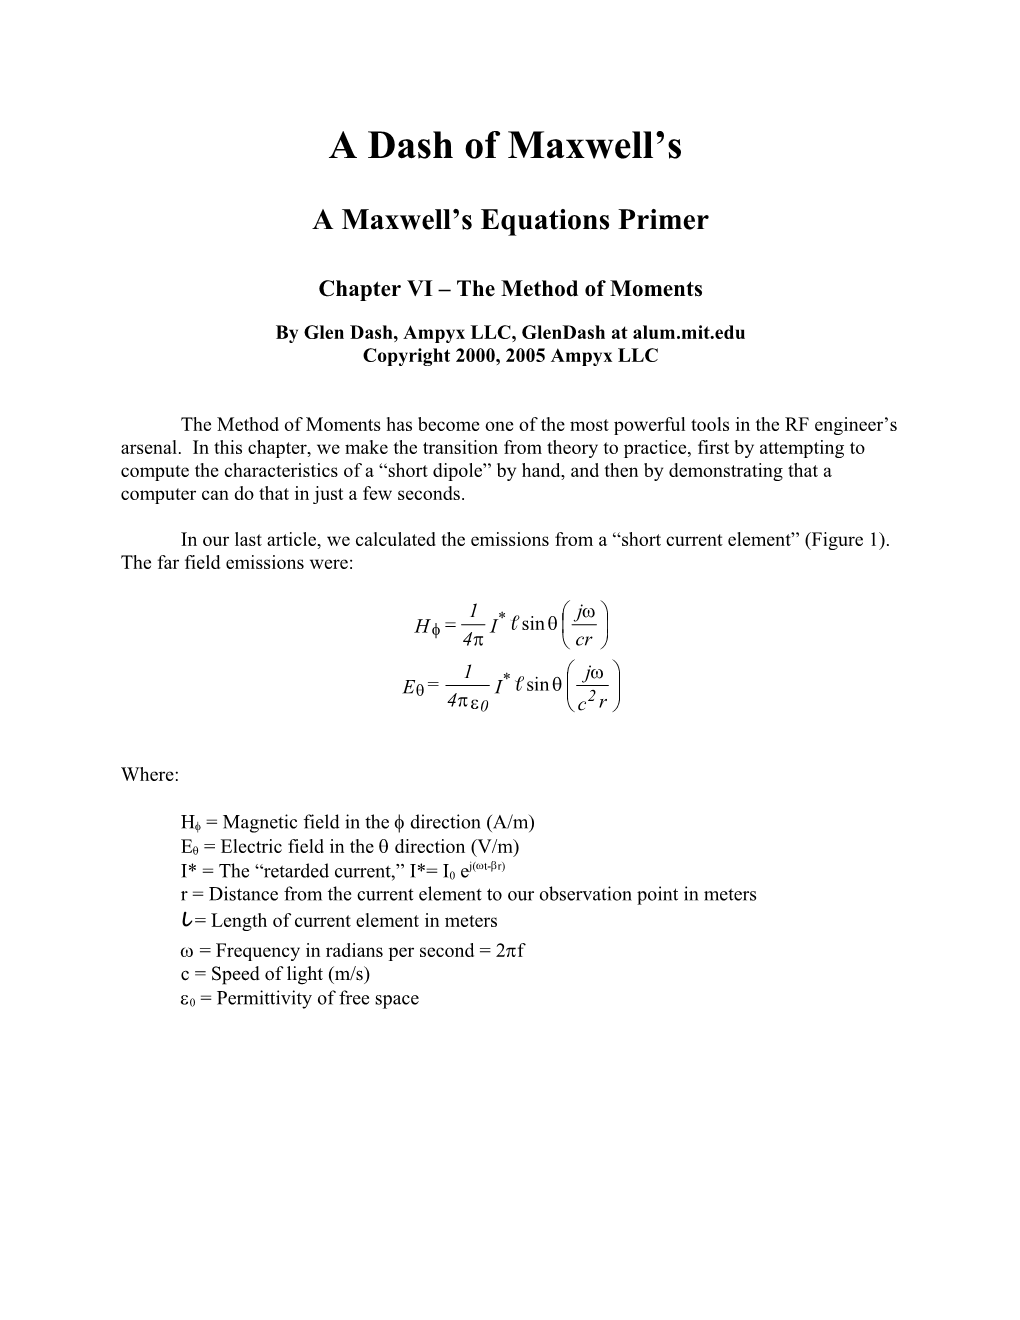 Maxwell=S Primer Part VI